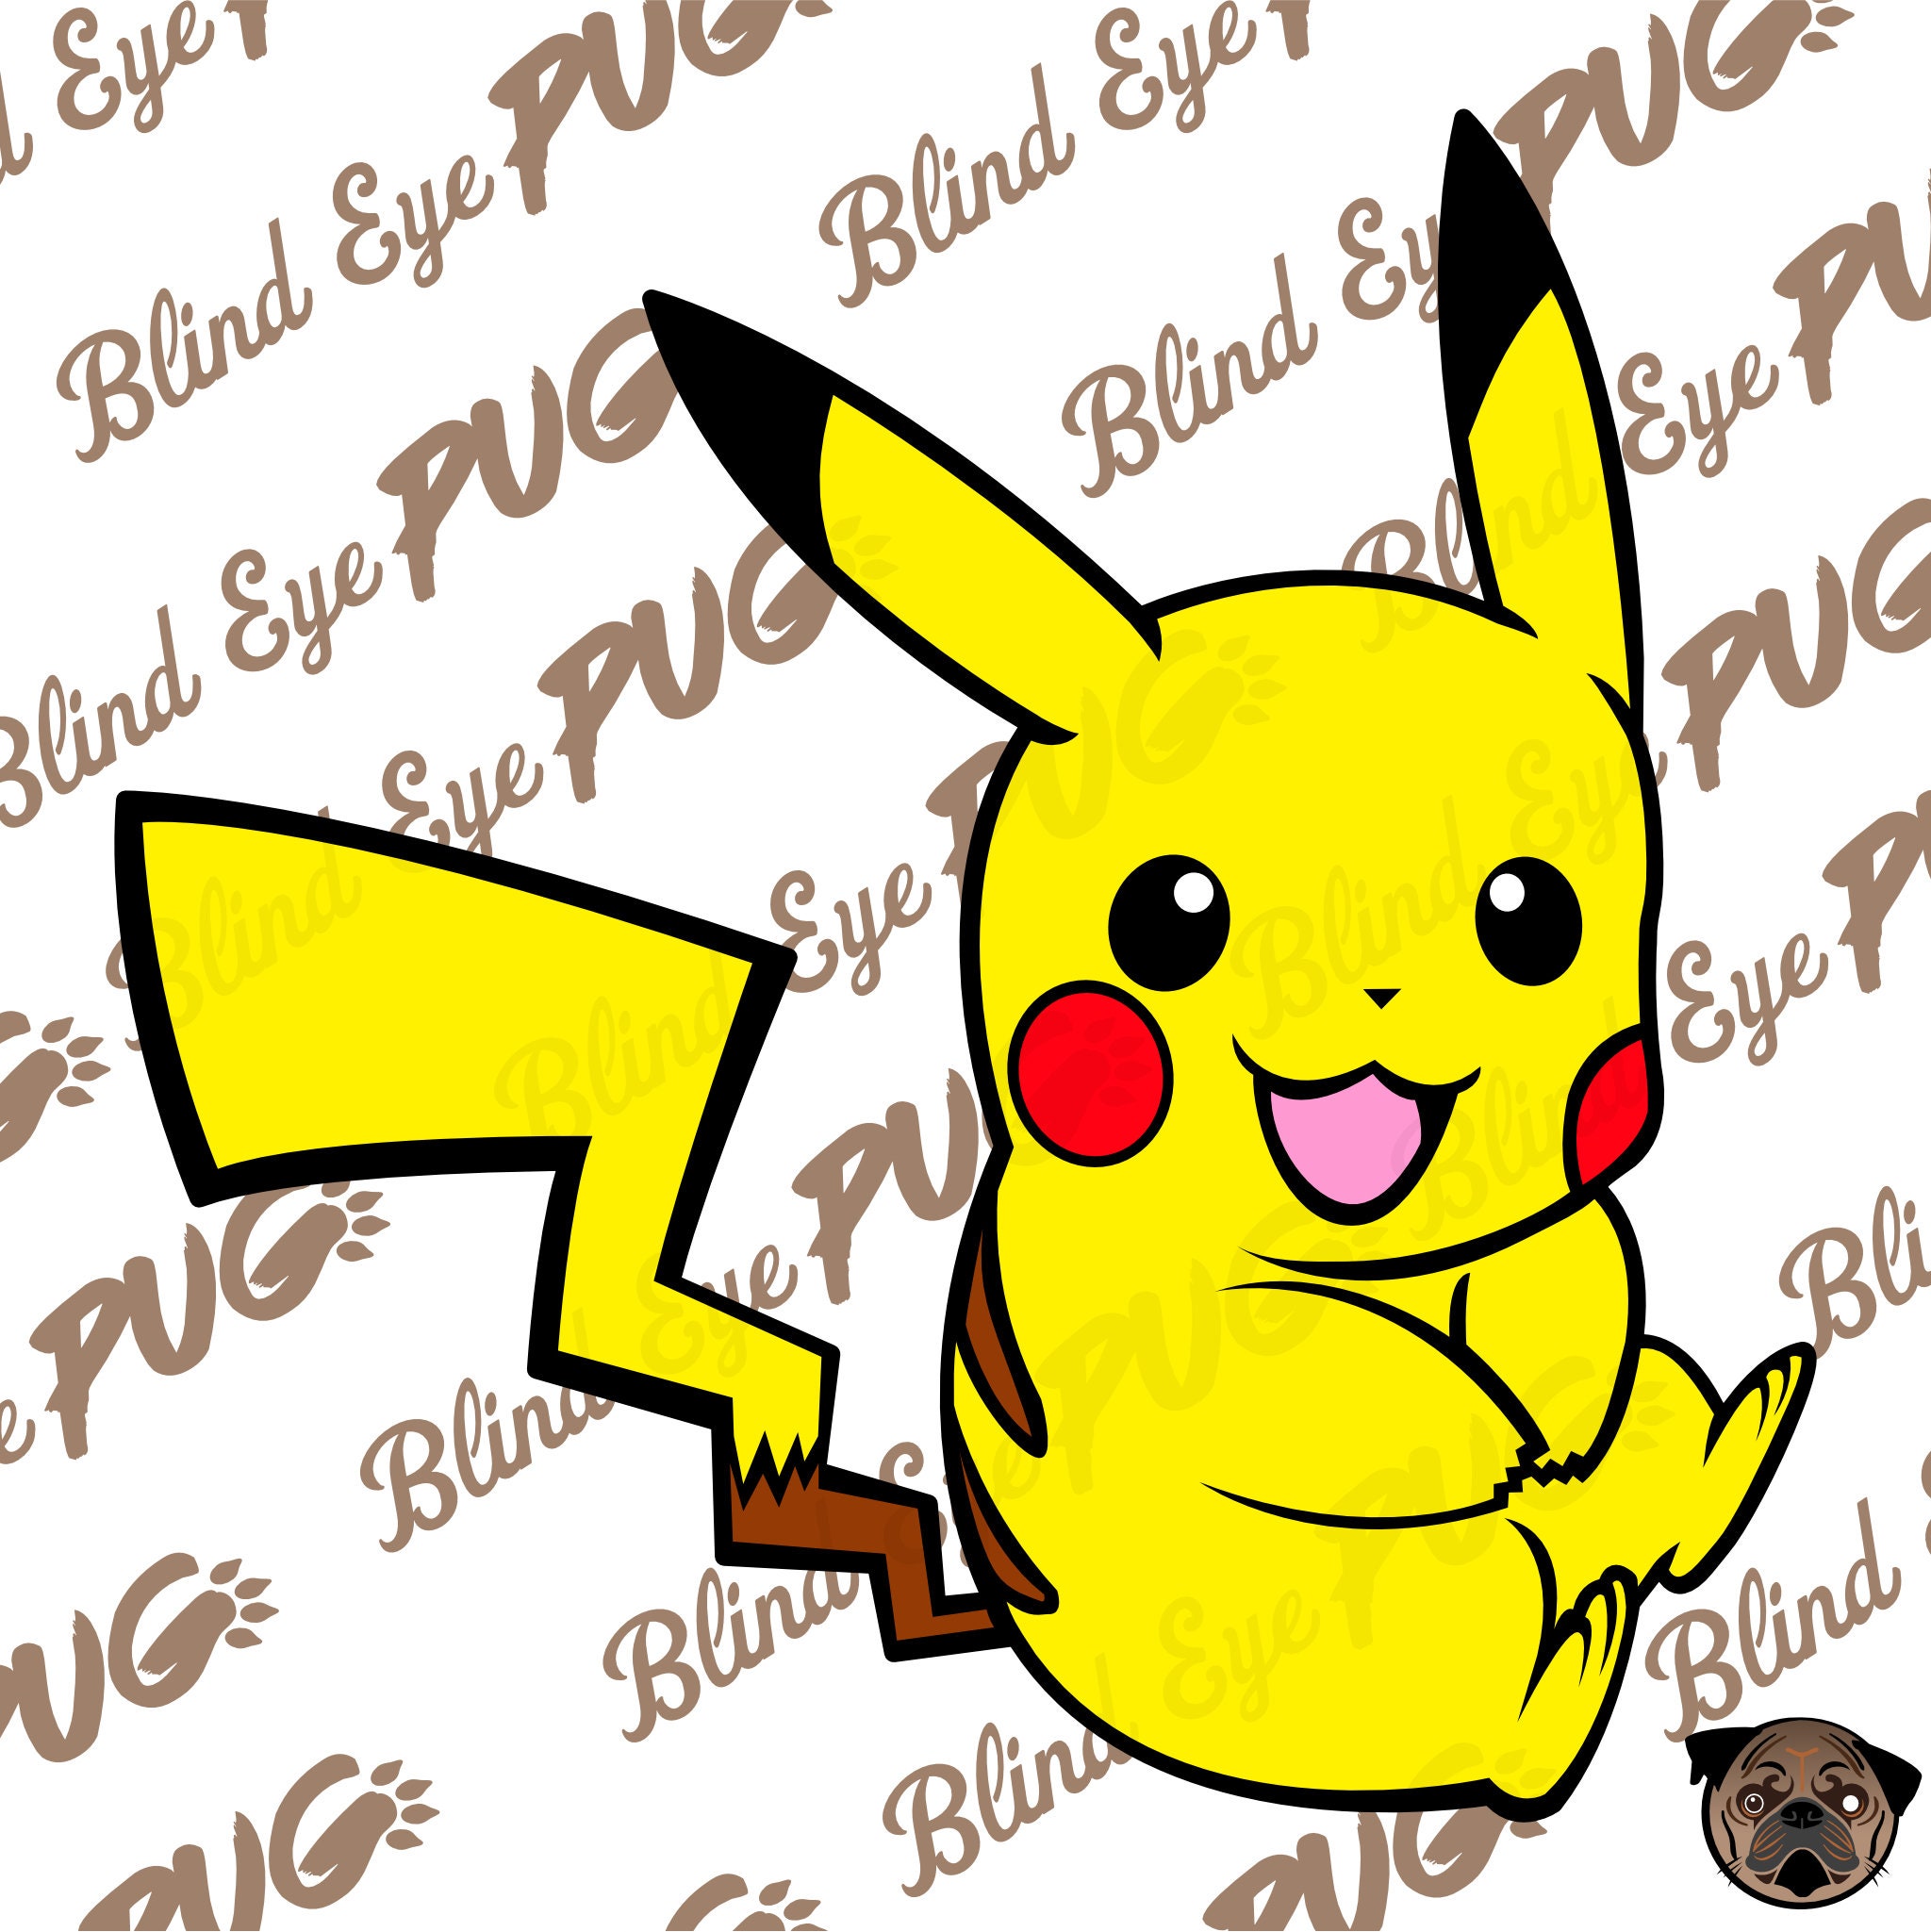 Buy Pikachu SVG Layer, Pokemon, Smash Brother, Eevee, Pikachu